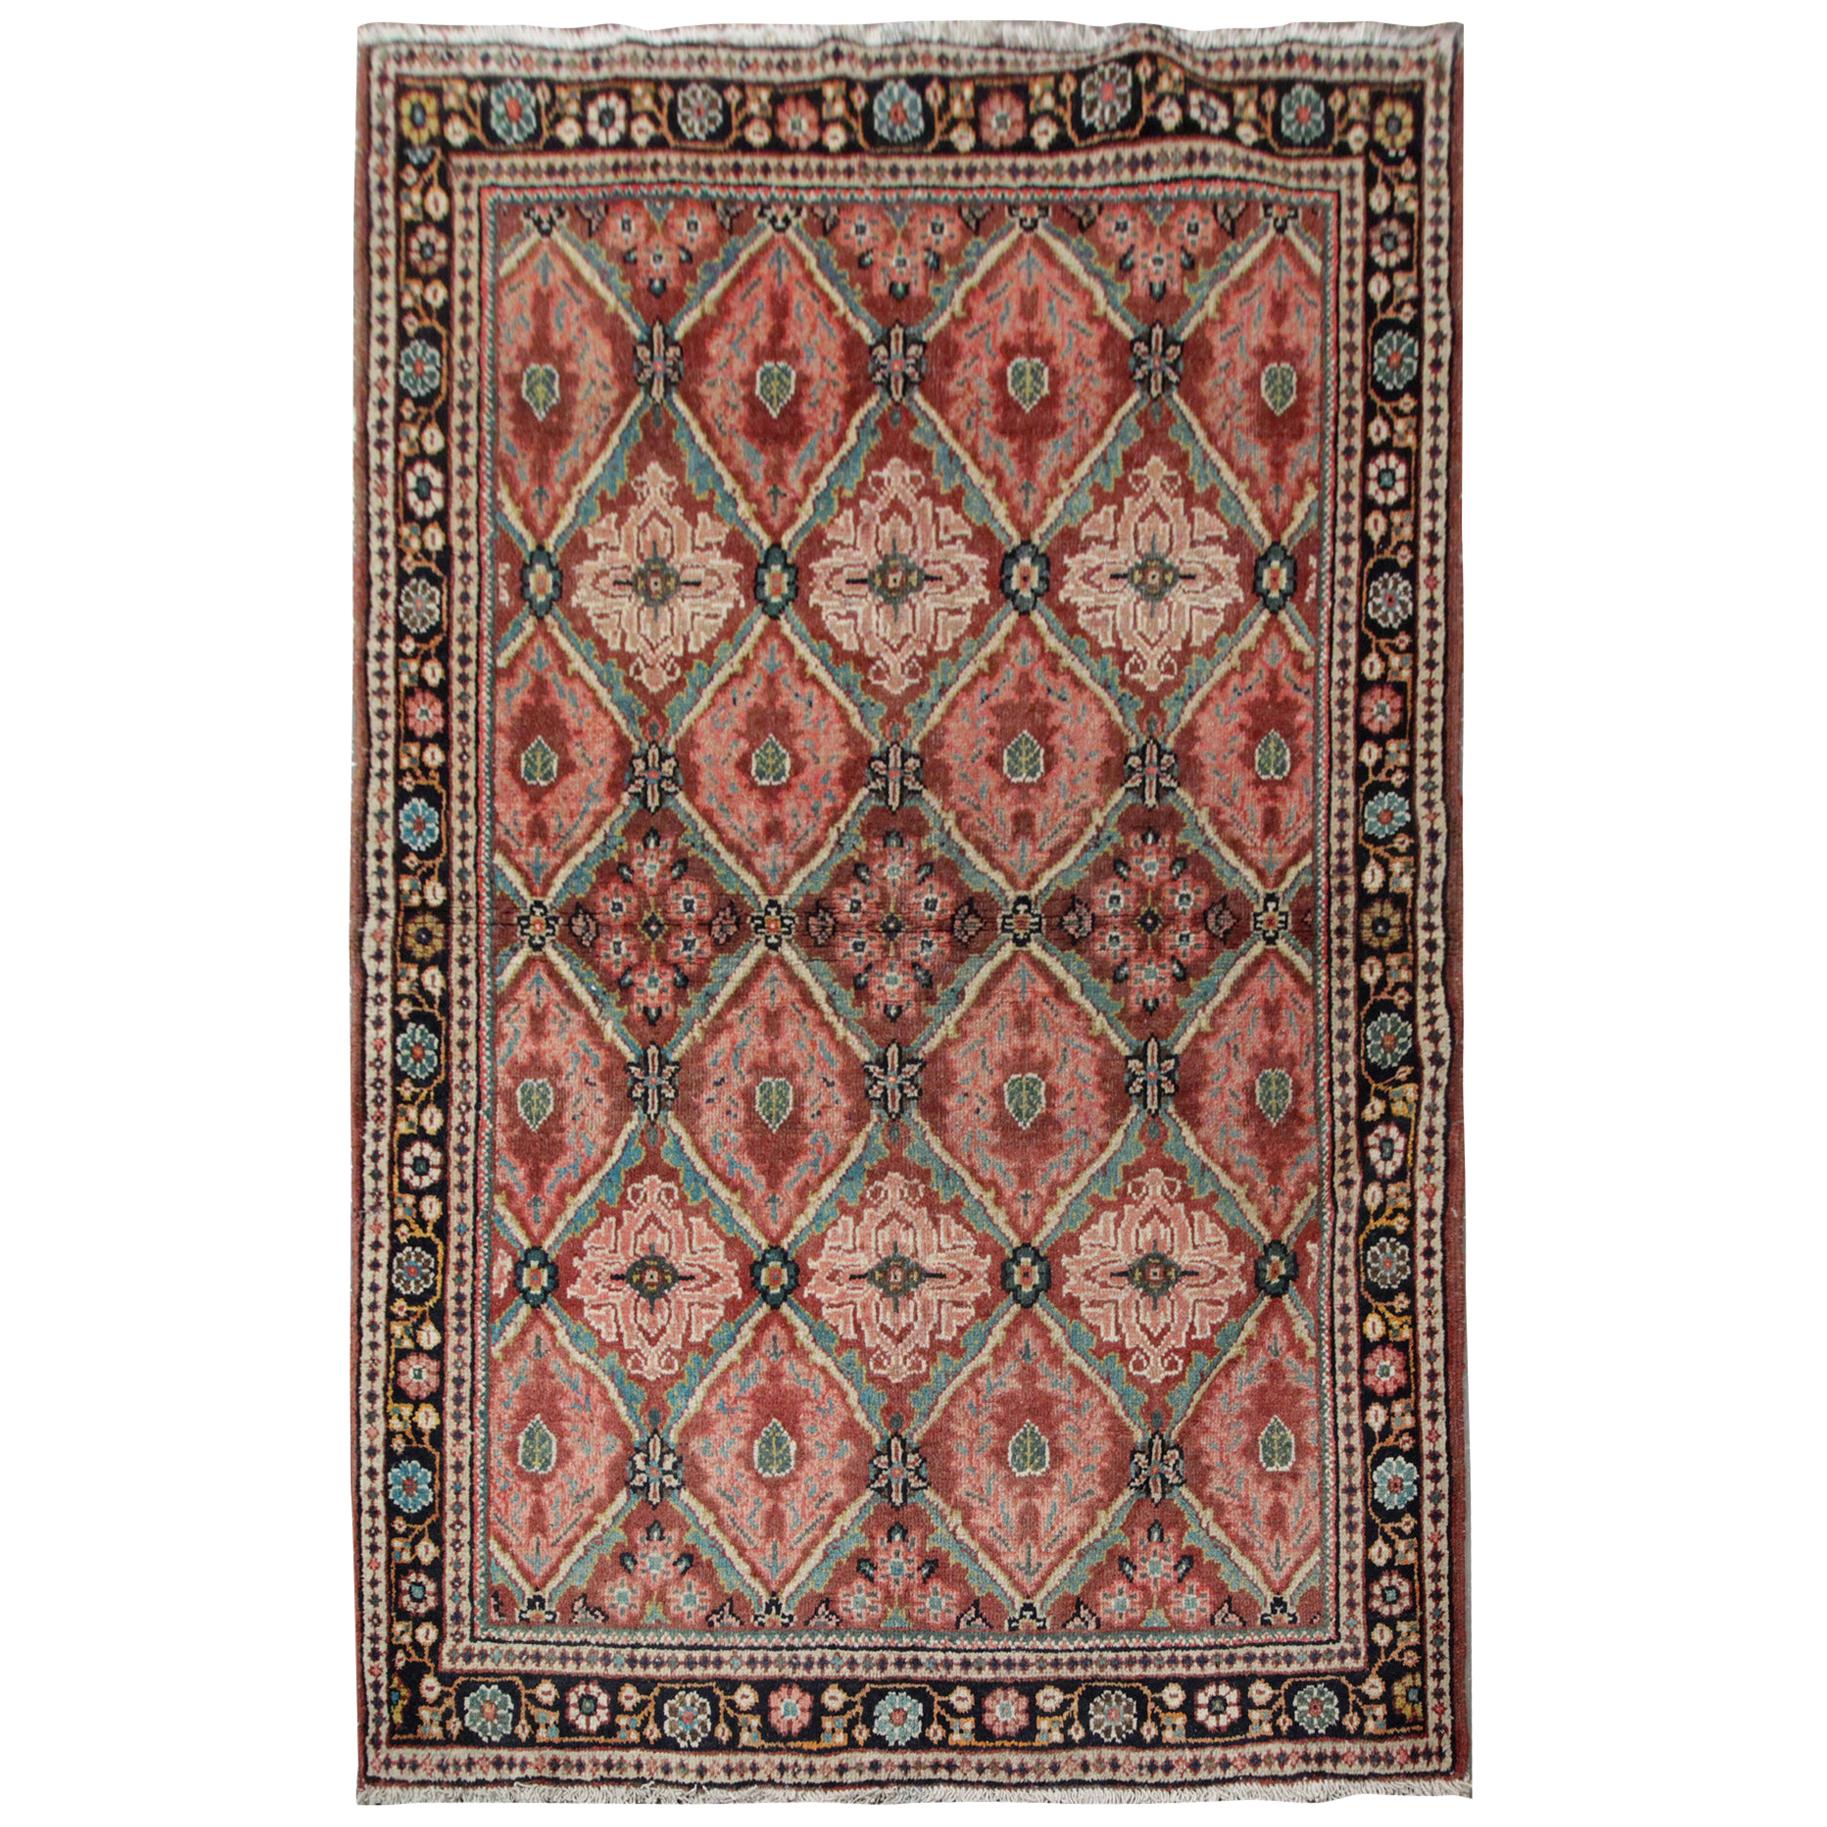 Handmade Carpet Antique Rug, Traditional Turkish Pink Living Room Rug Oriental